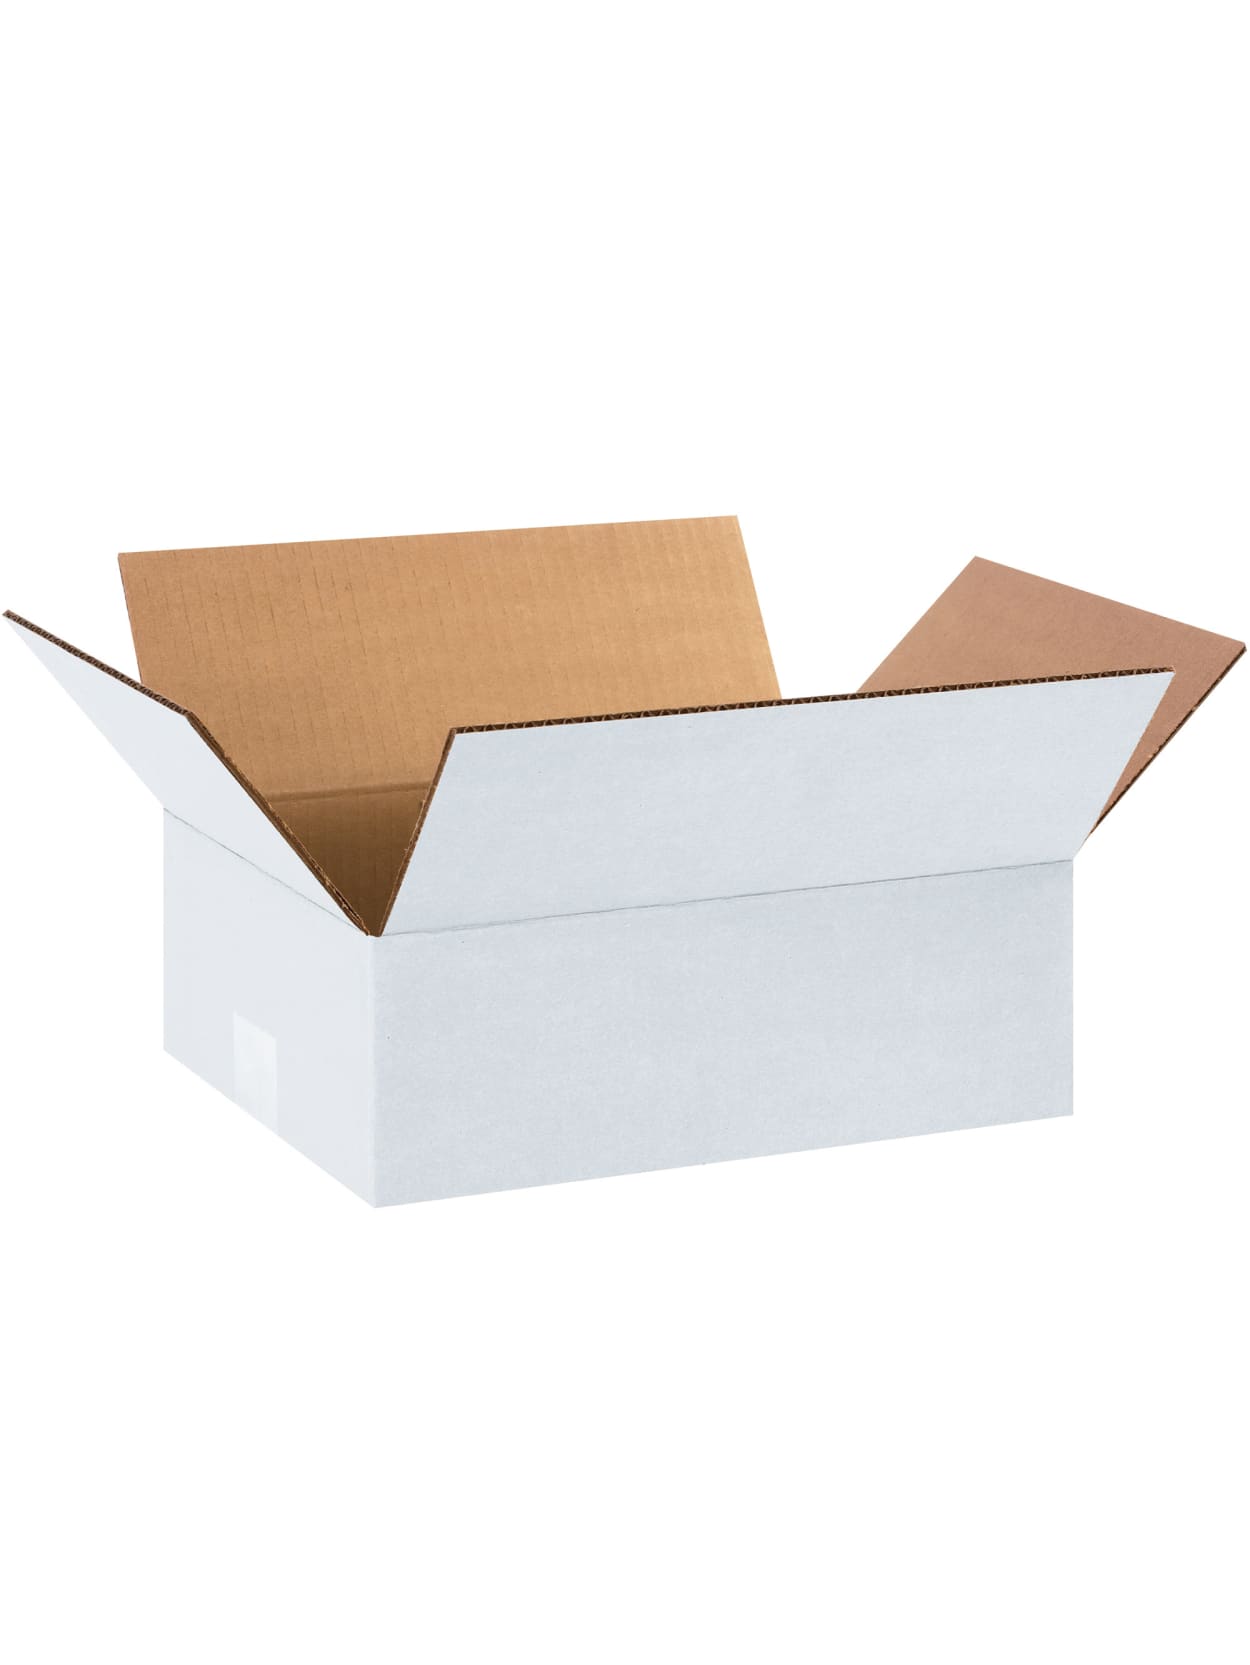 22" x 14" x 6" Cardboard Boxes Mailing Packing Shipping Box Corrugated Carton 